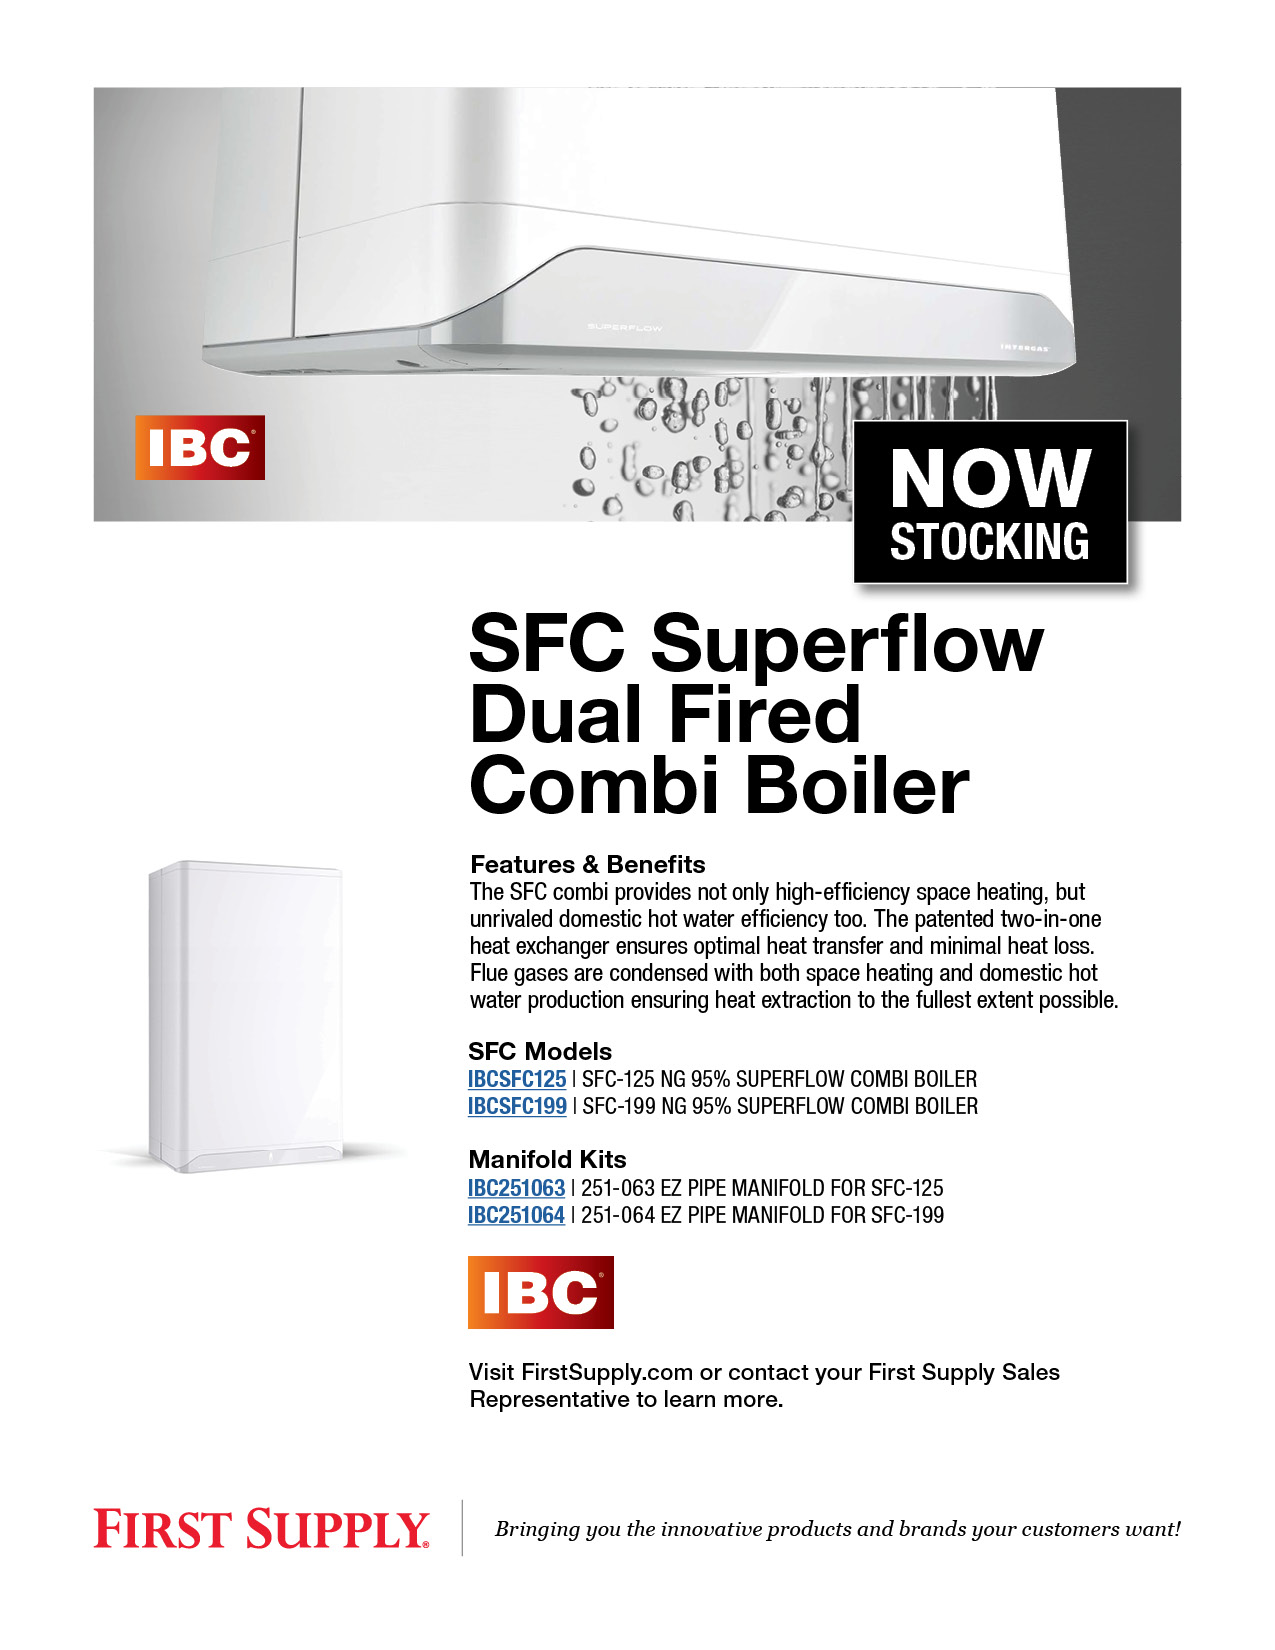 IBC SFC Superflow Dual Fired Combi Boiler